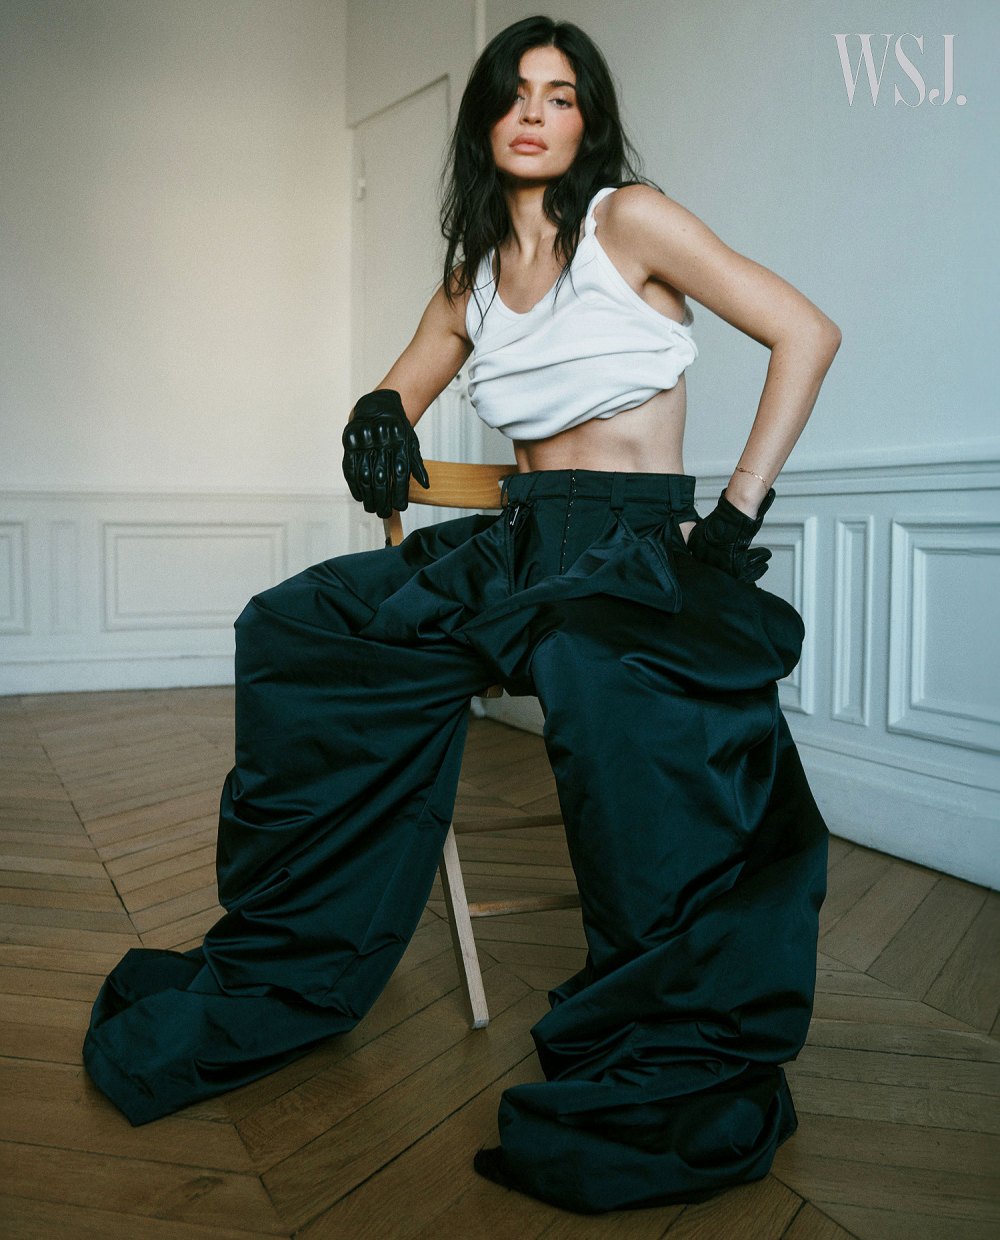 Kylie Jenner Shares More Details on Fashion Line